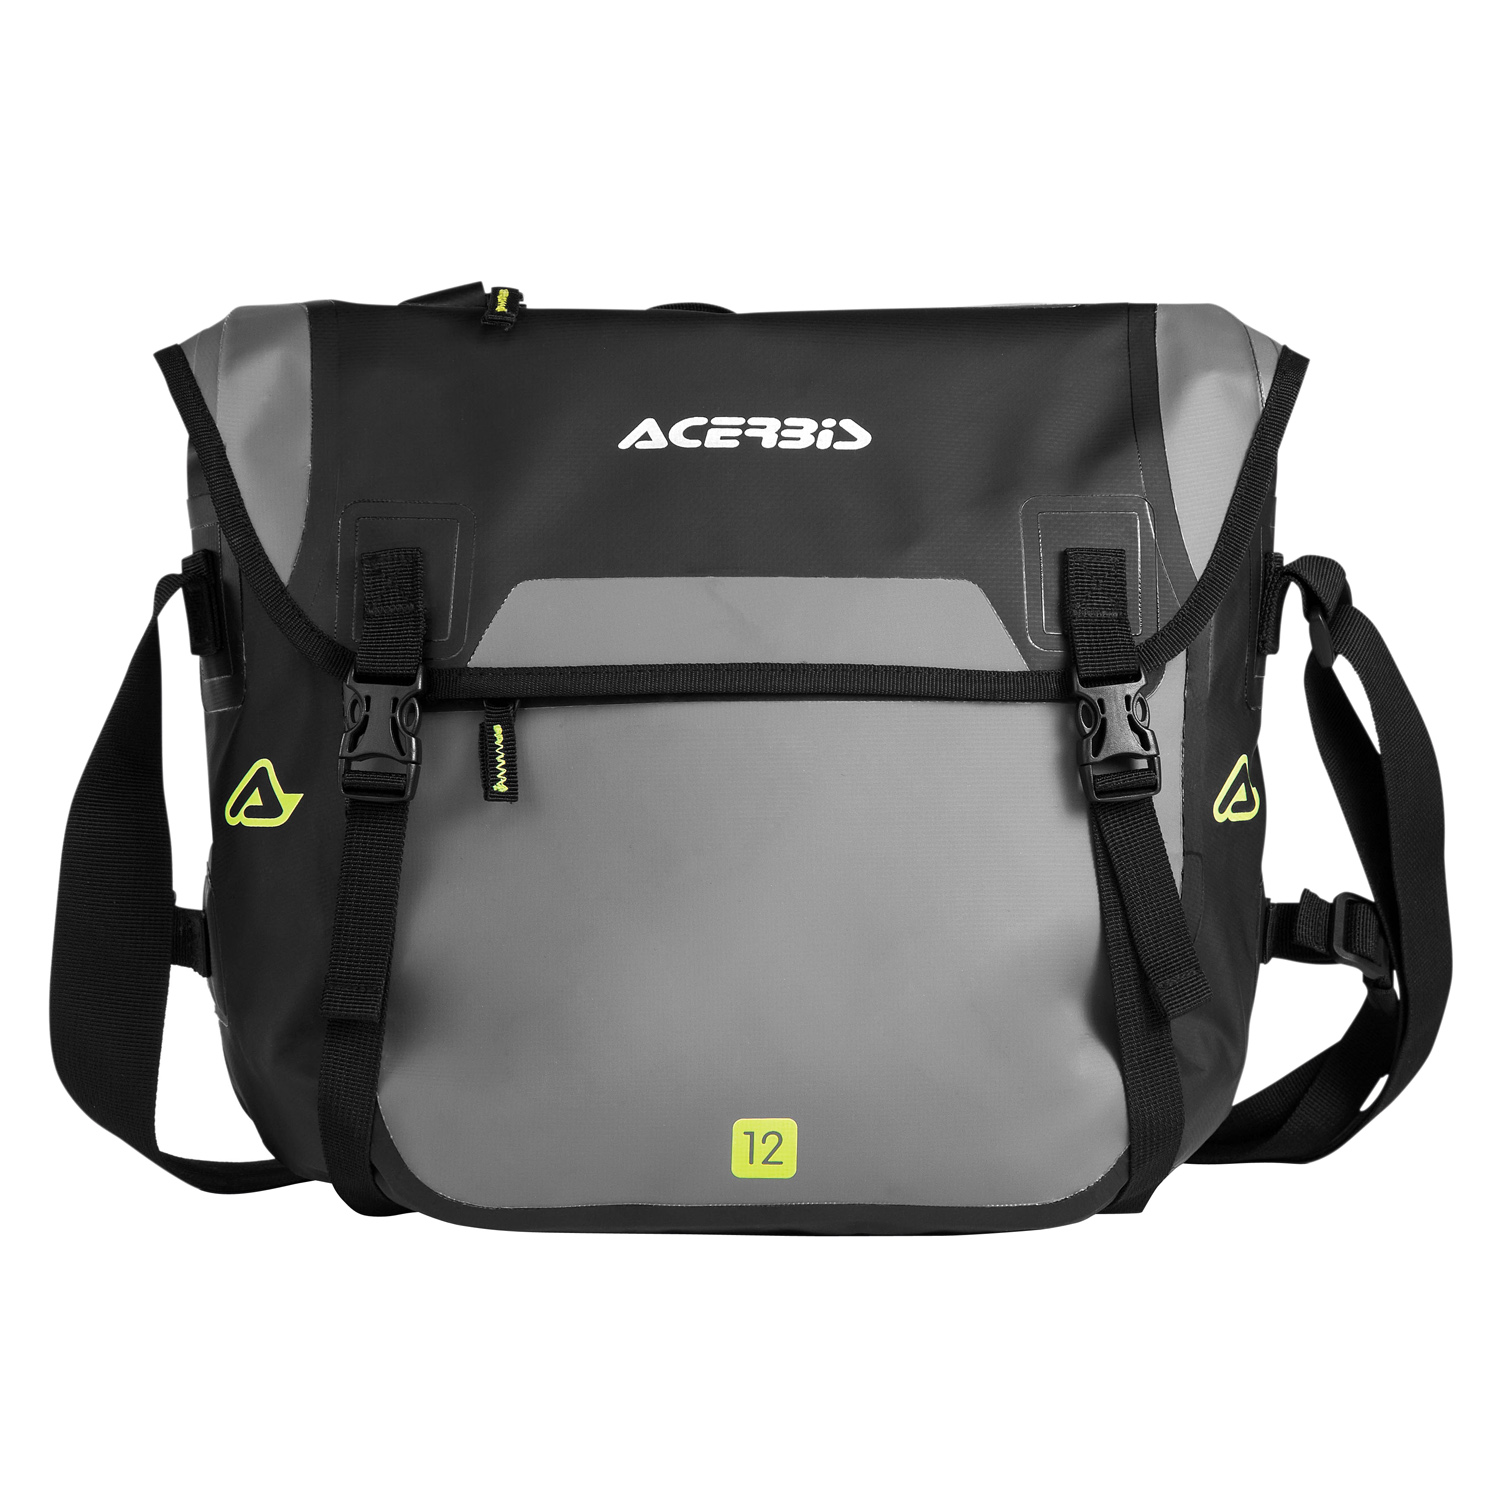 Acerbis Messenger Bag No Water 12 Liter - Black/Grey